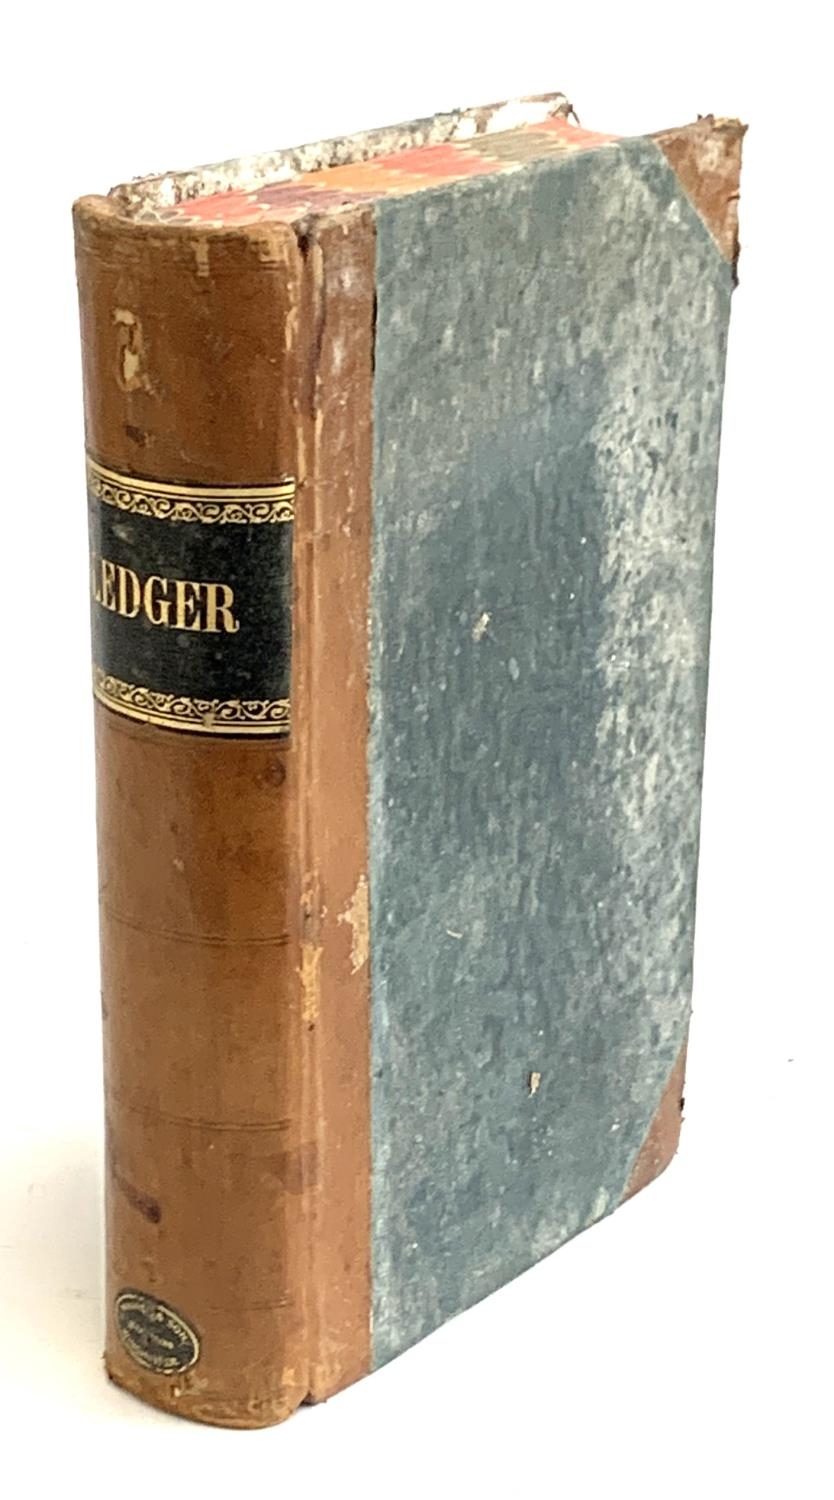 A late 19th century ledger, three quarter leather